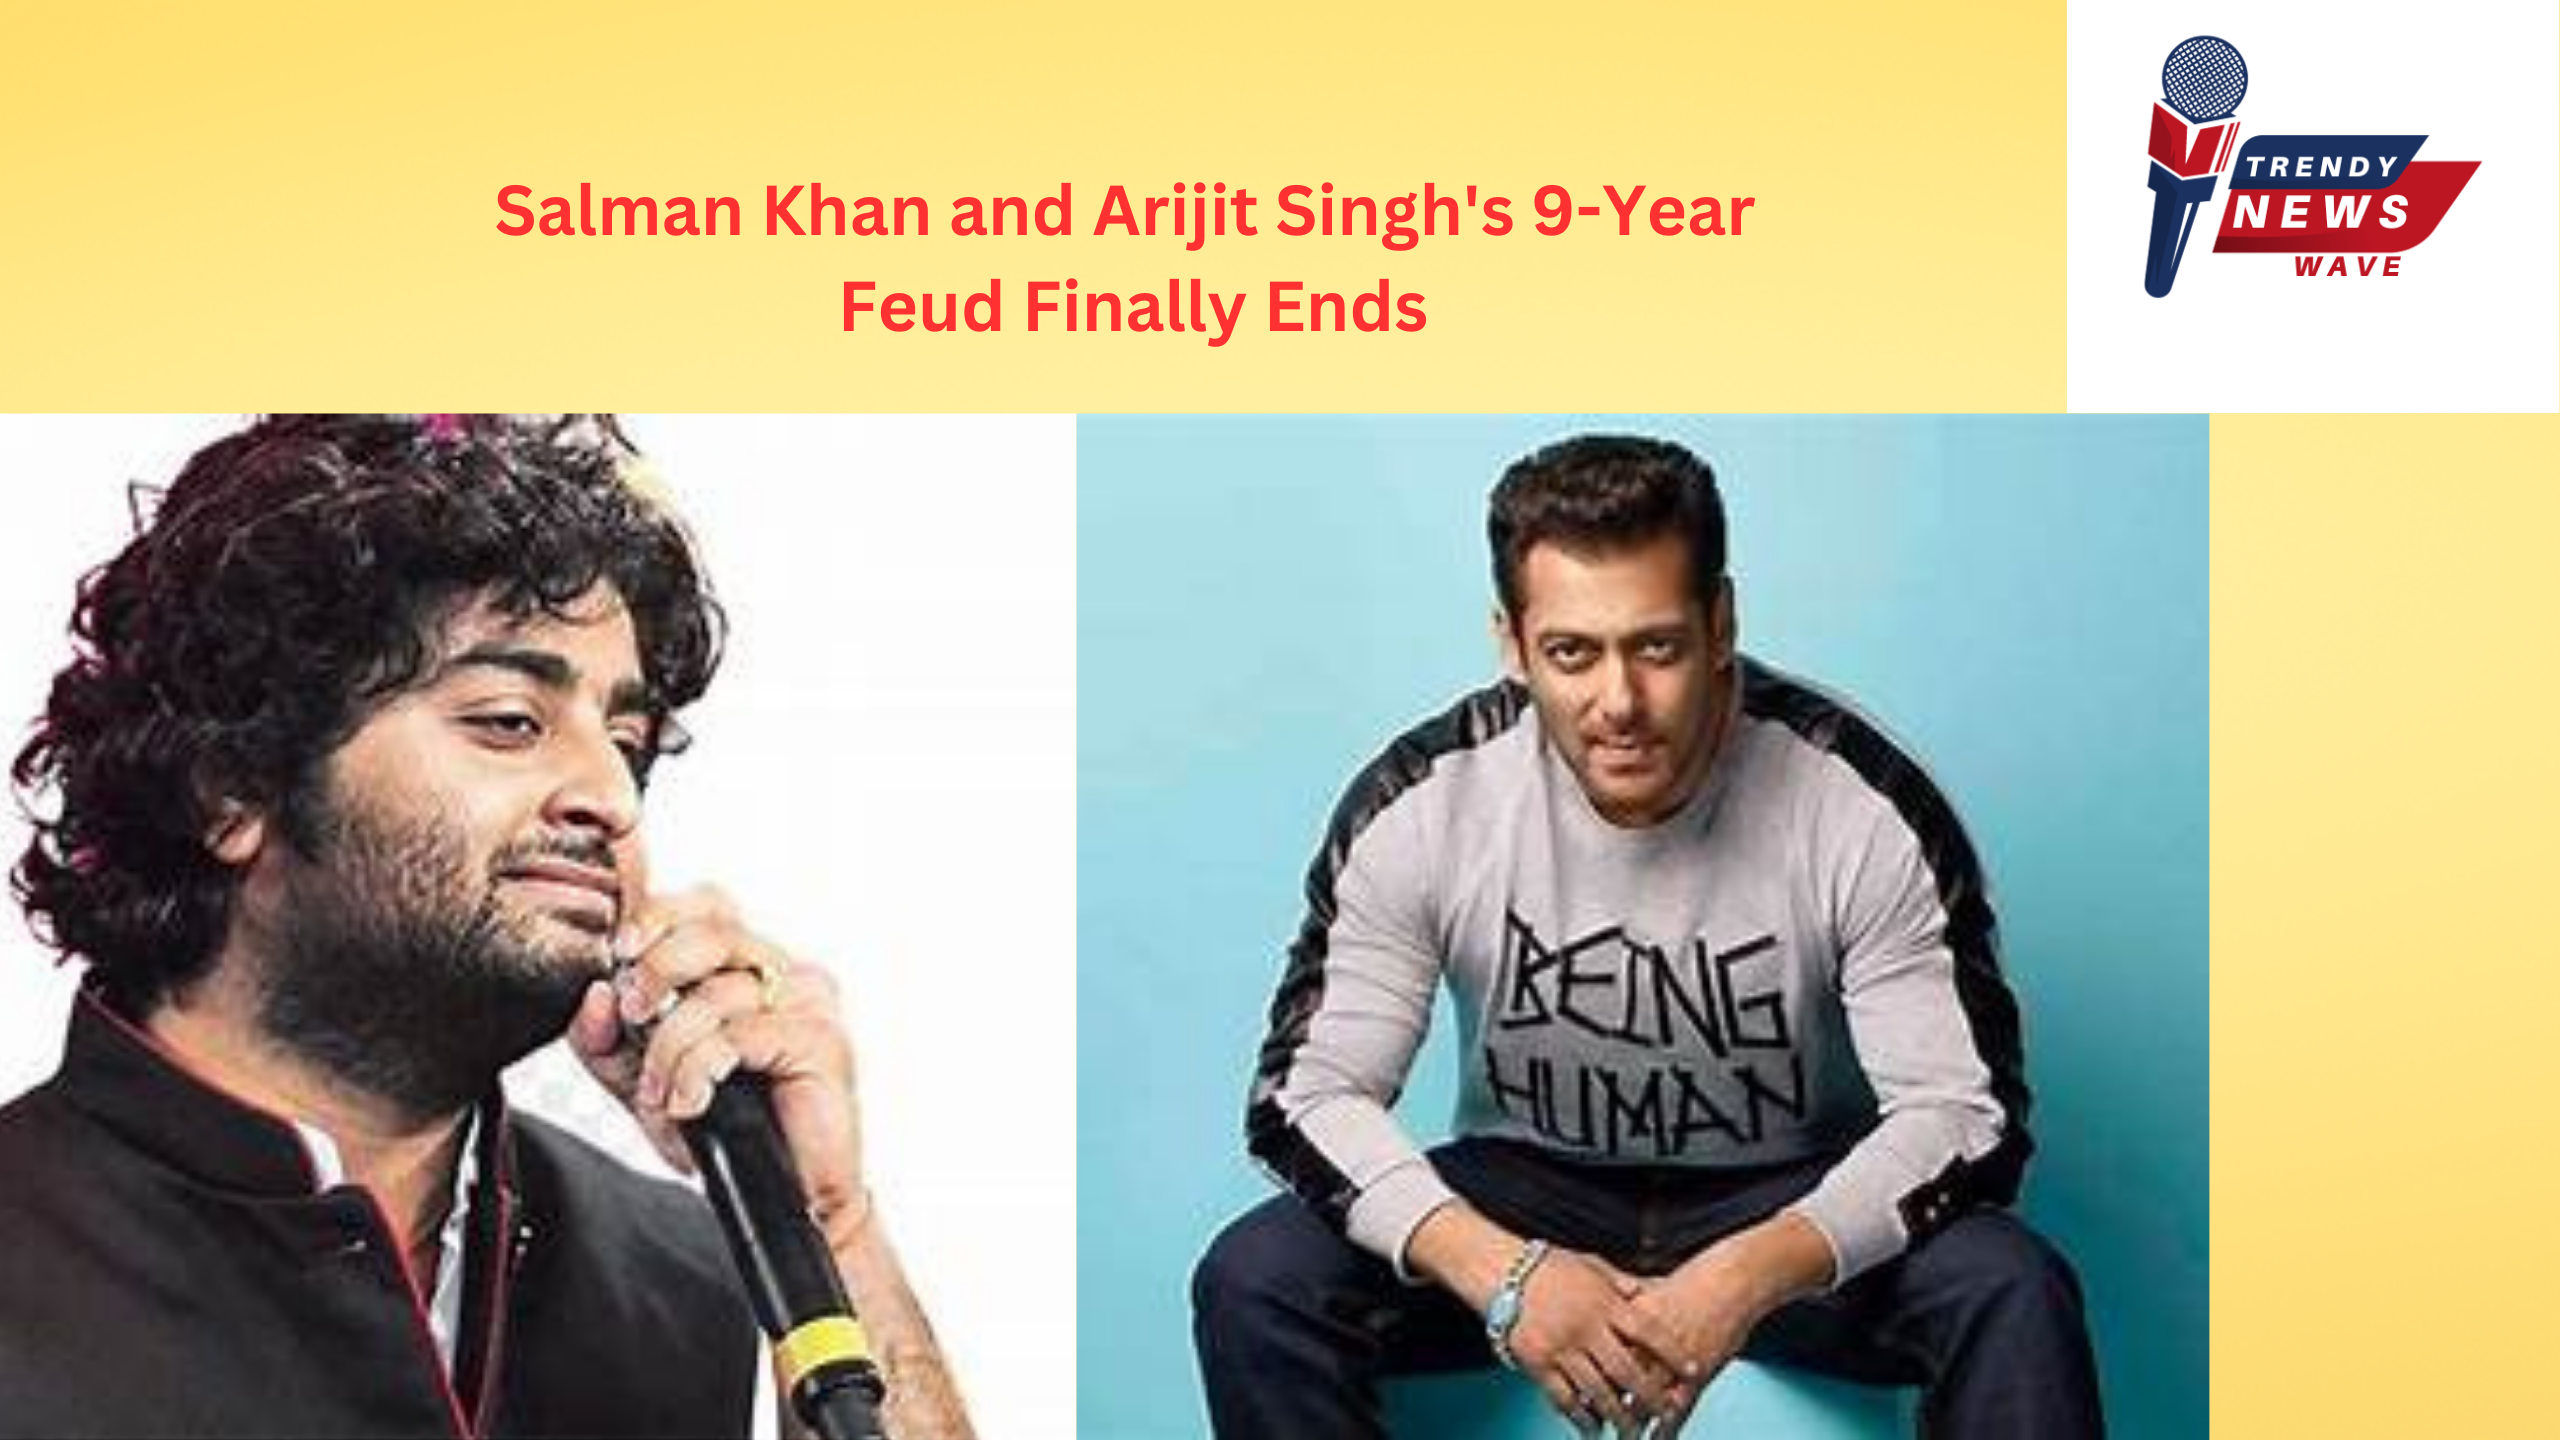 Salman Khan and Arijit Singh's 9-Year Feud Finally Ends